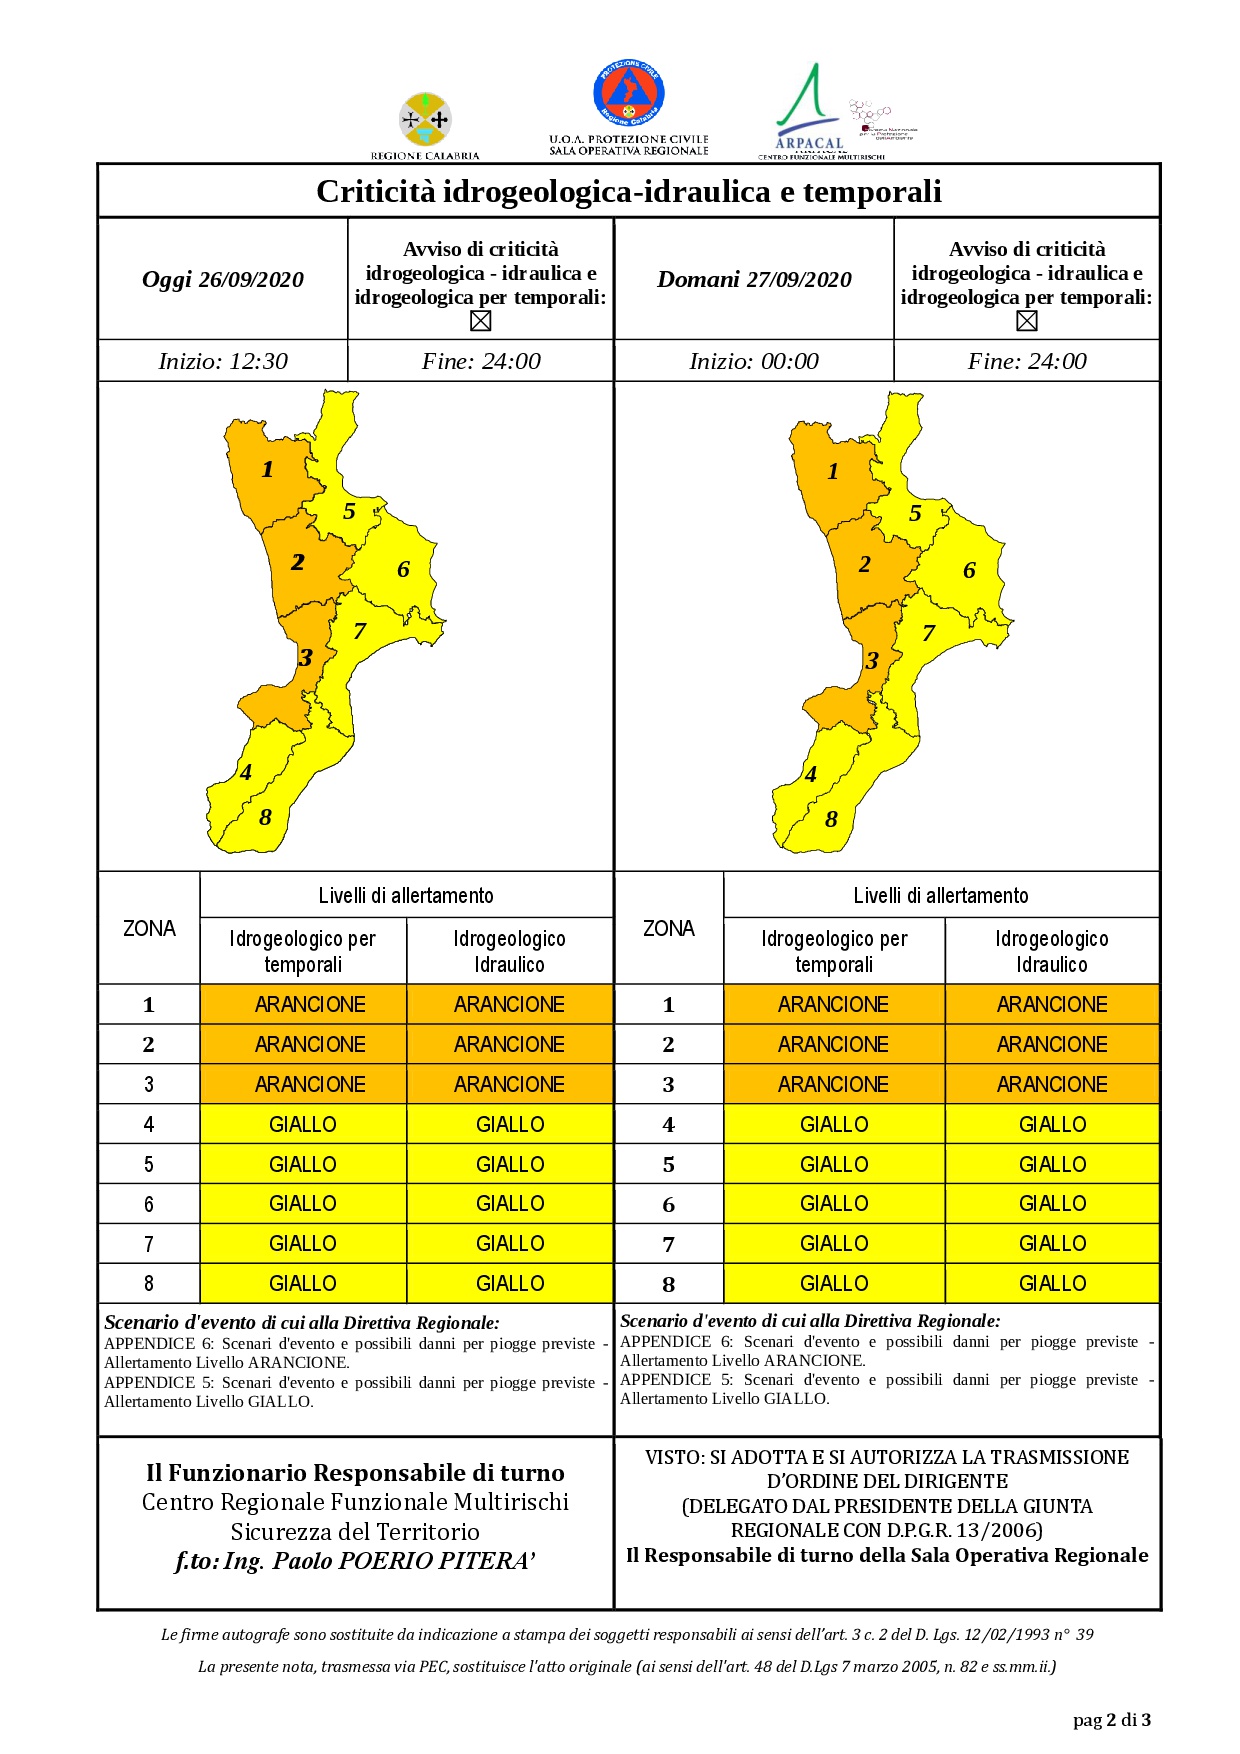 Criticità idrogeologica-idraulica e temporali in Calabria 26-09-2020